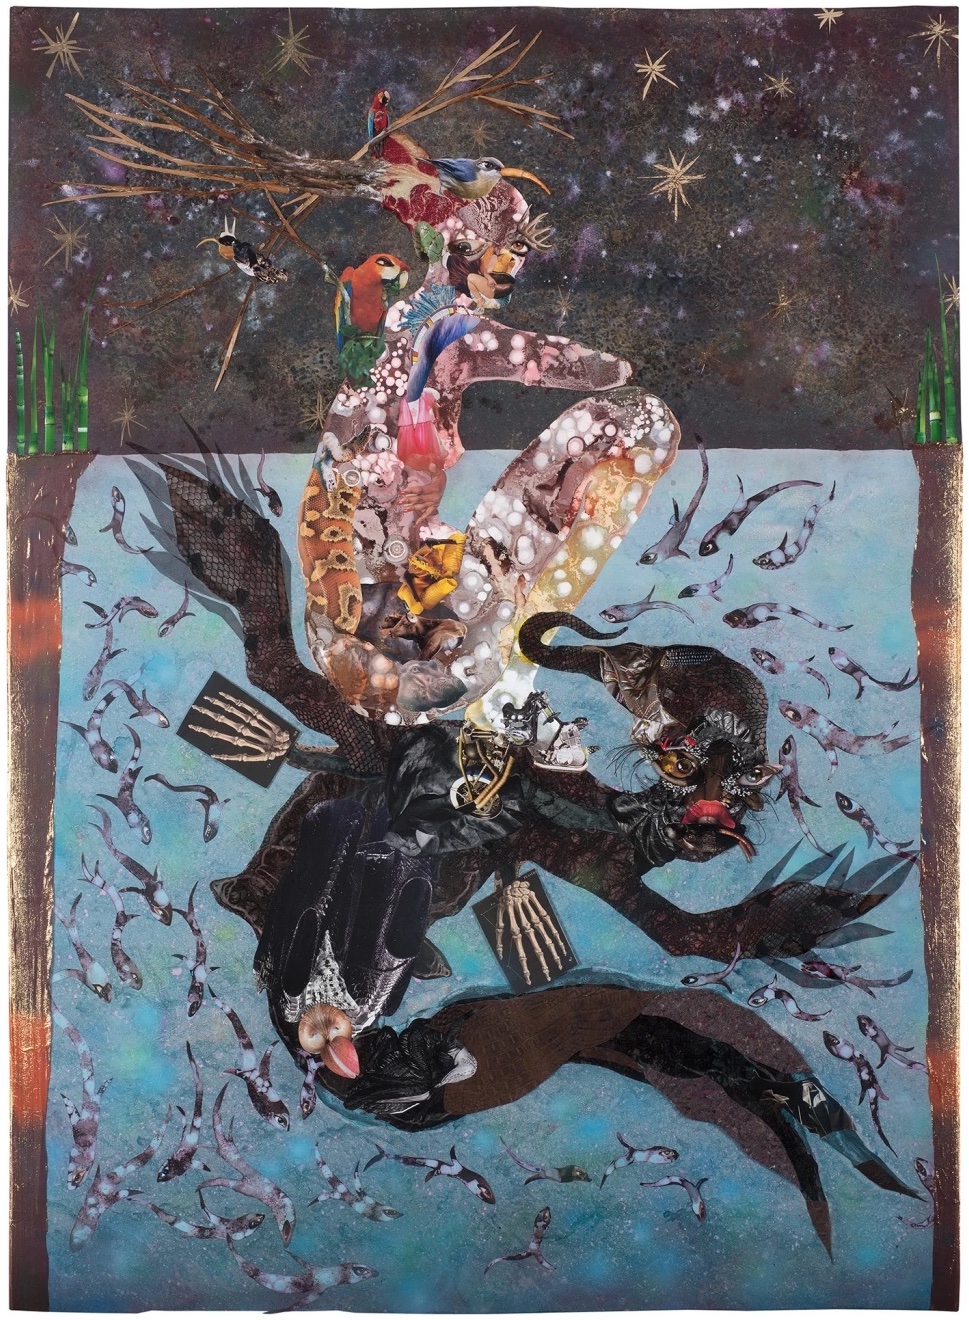 Wangechi Mutu, Beneath Lies the Power, 2014, collage painting on vinyl, 231 x 175.1 x 8.9 cm. Courtesy Victoria Miro